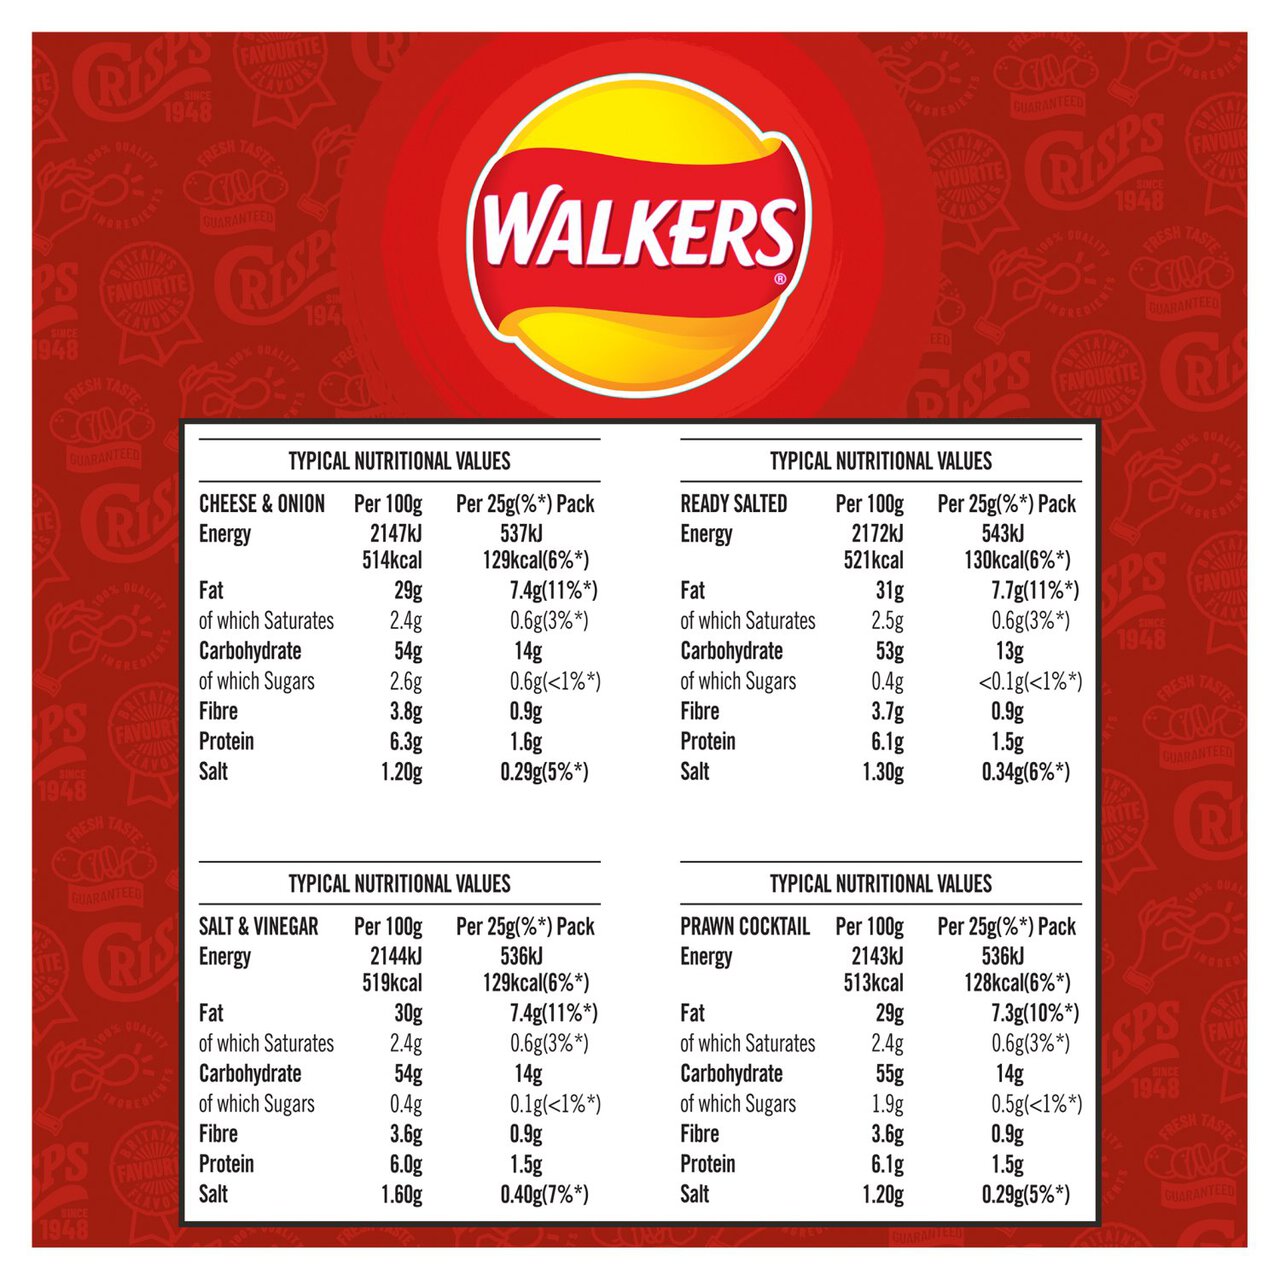 Walkers Classic Variety Multipack Crisps 12 per pack